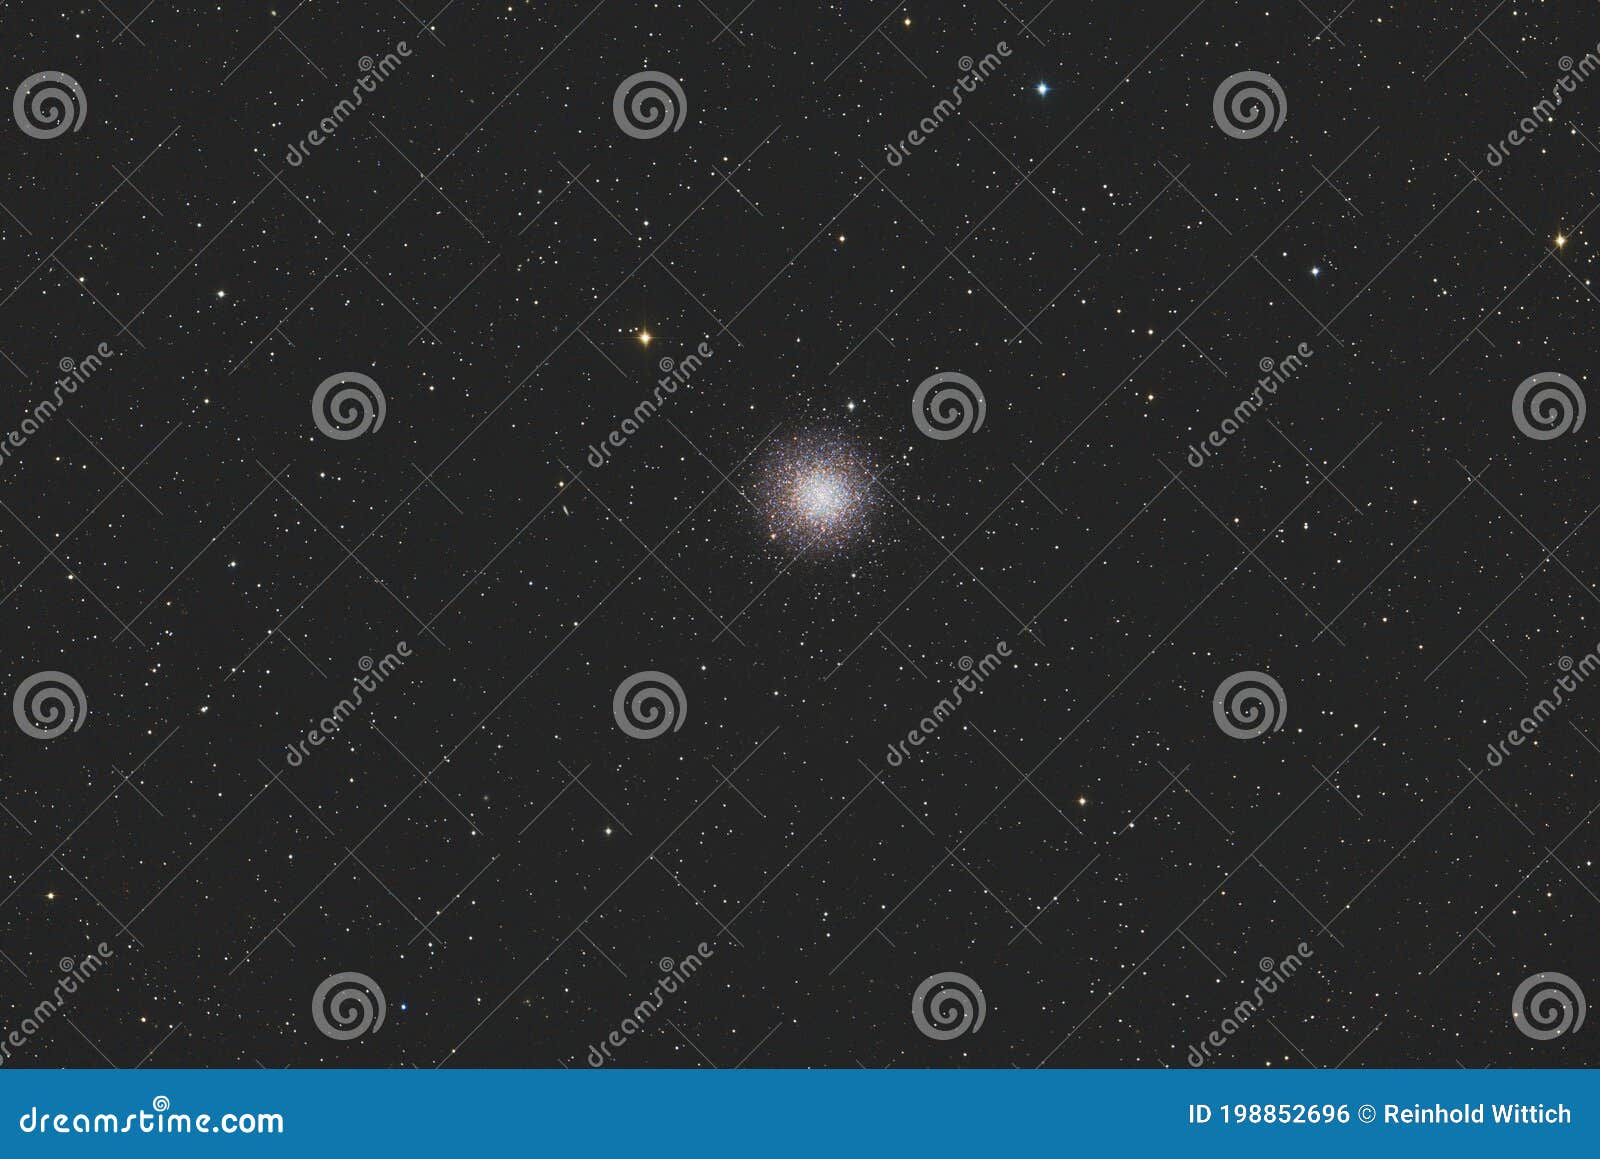 globular cluster m3